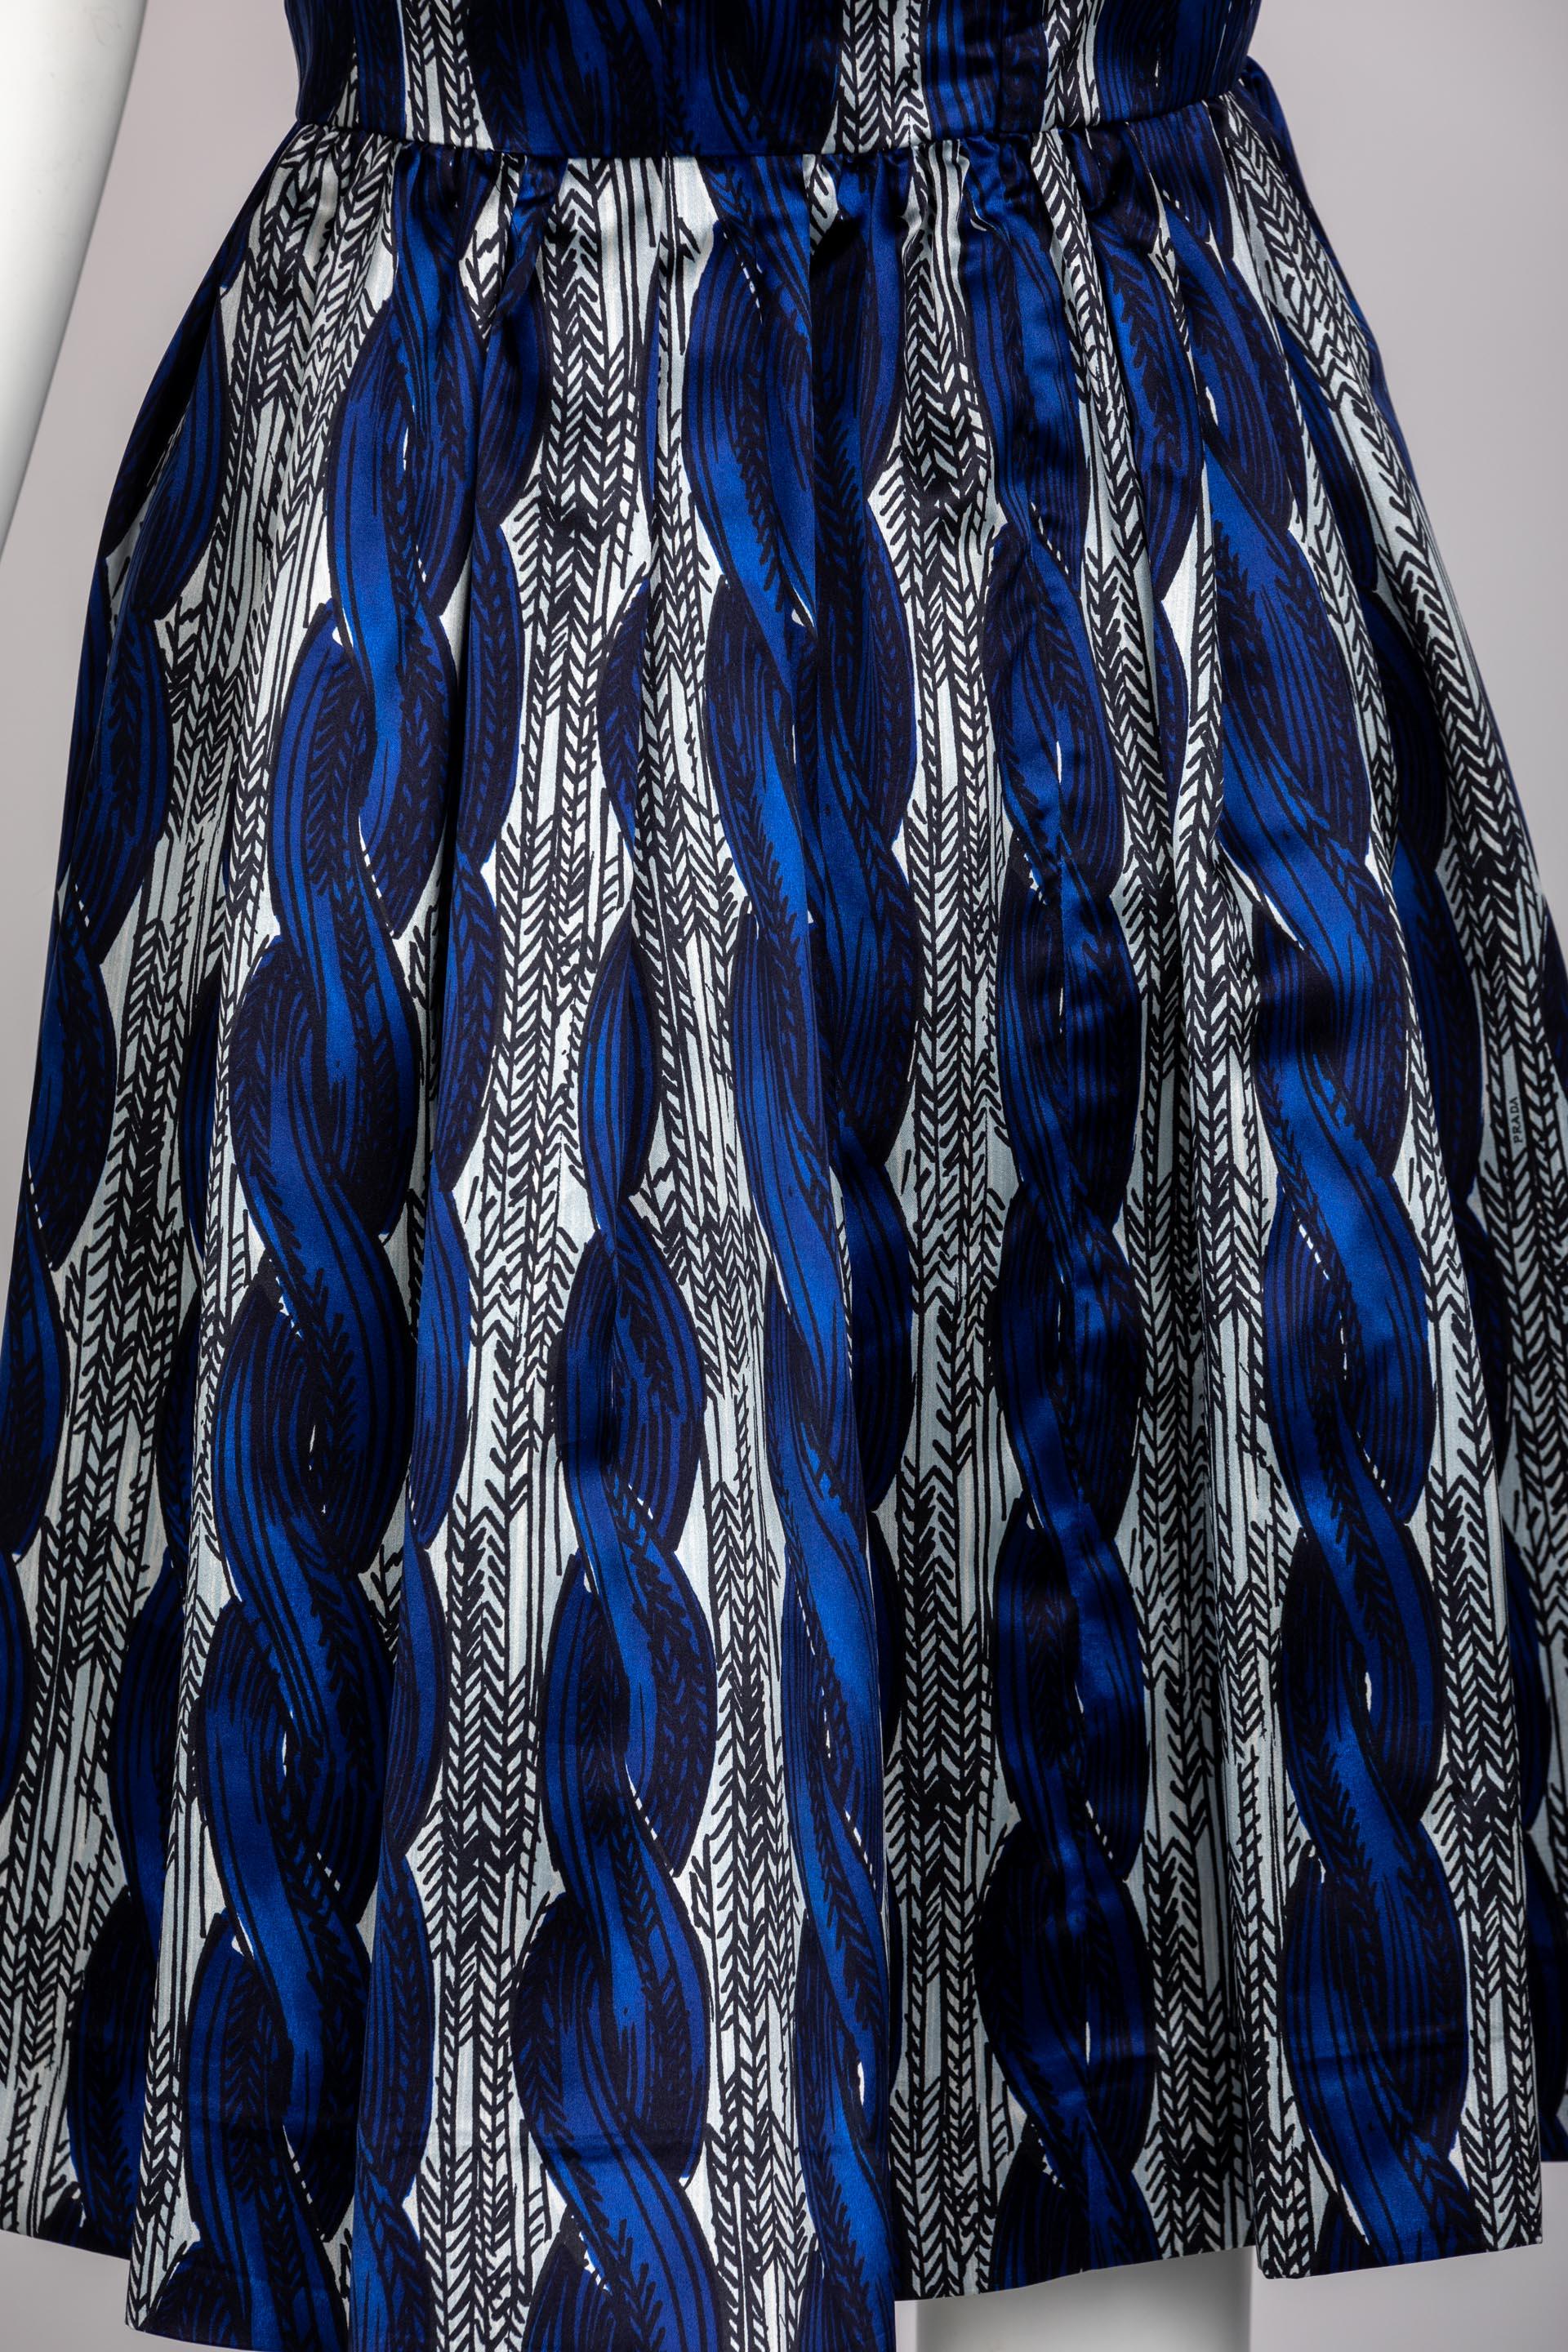 Women's Prada Silk Cable Knit Blue Black Printed Cut Out Dress Runway Fall 2010